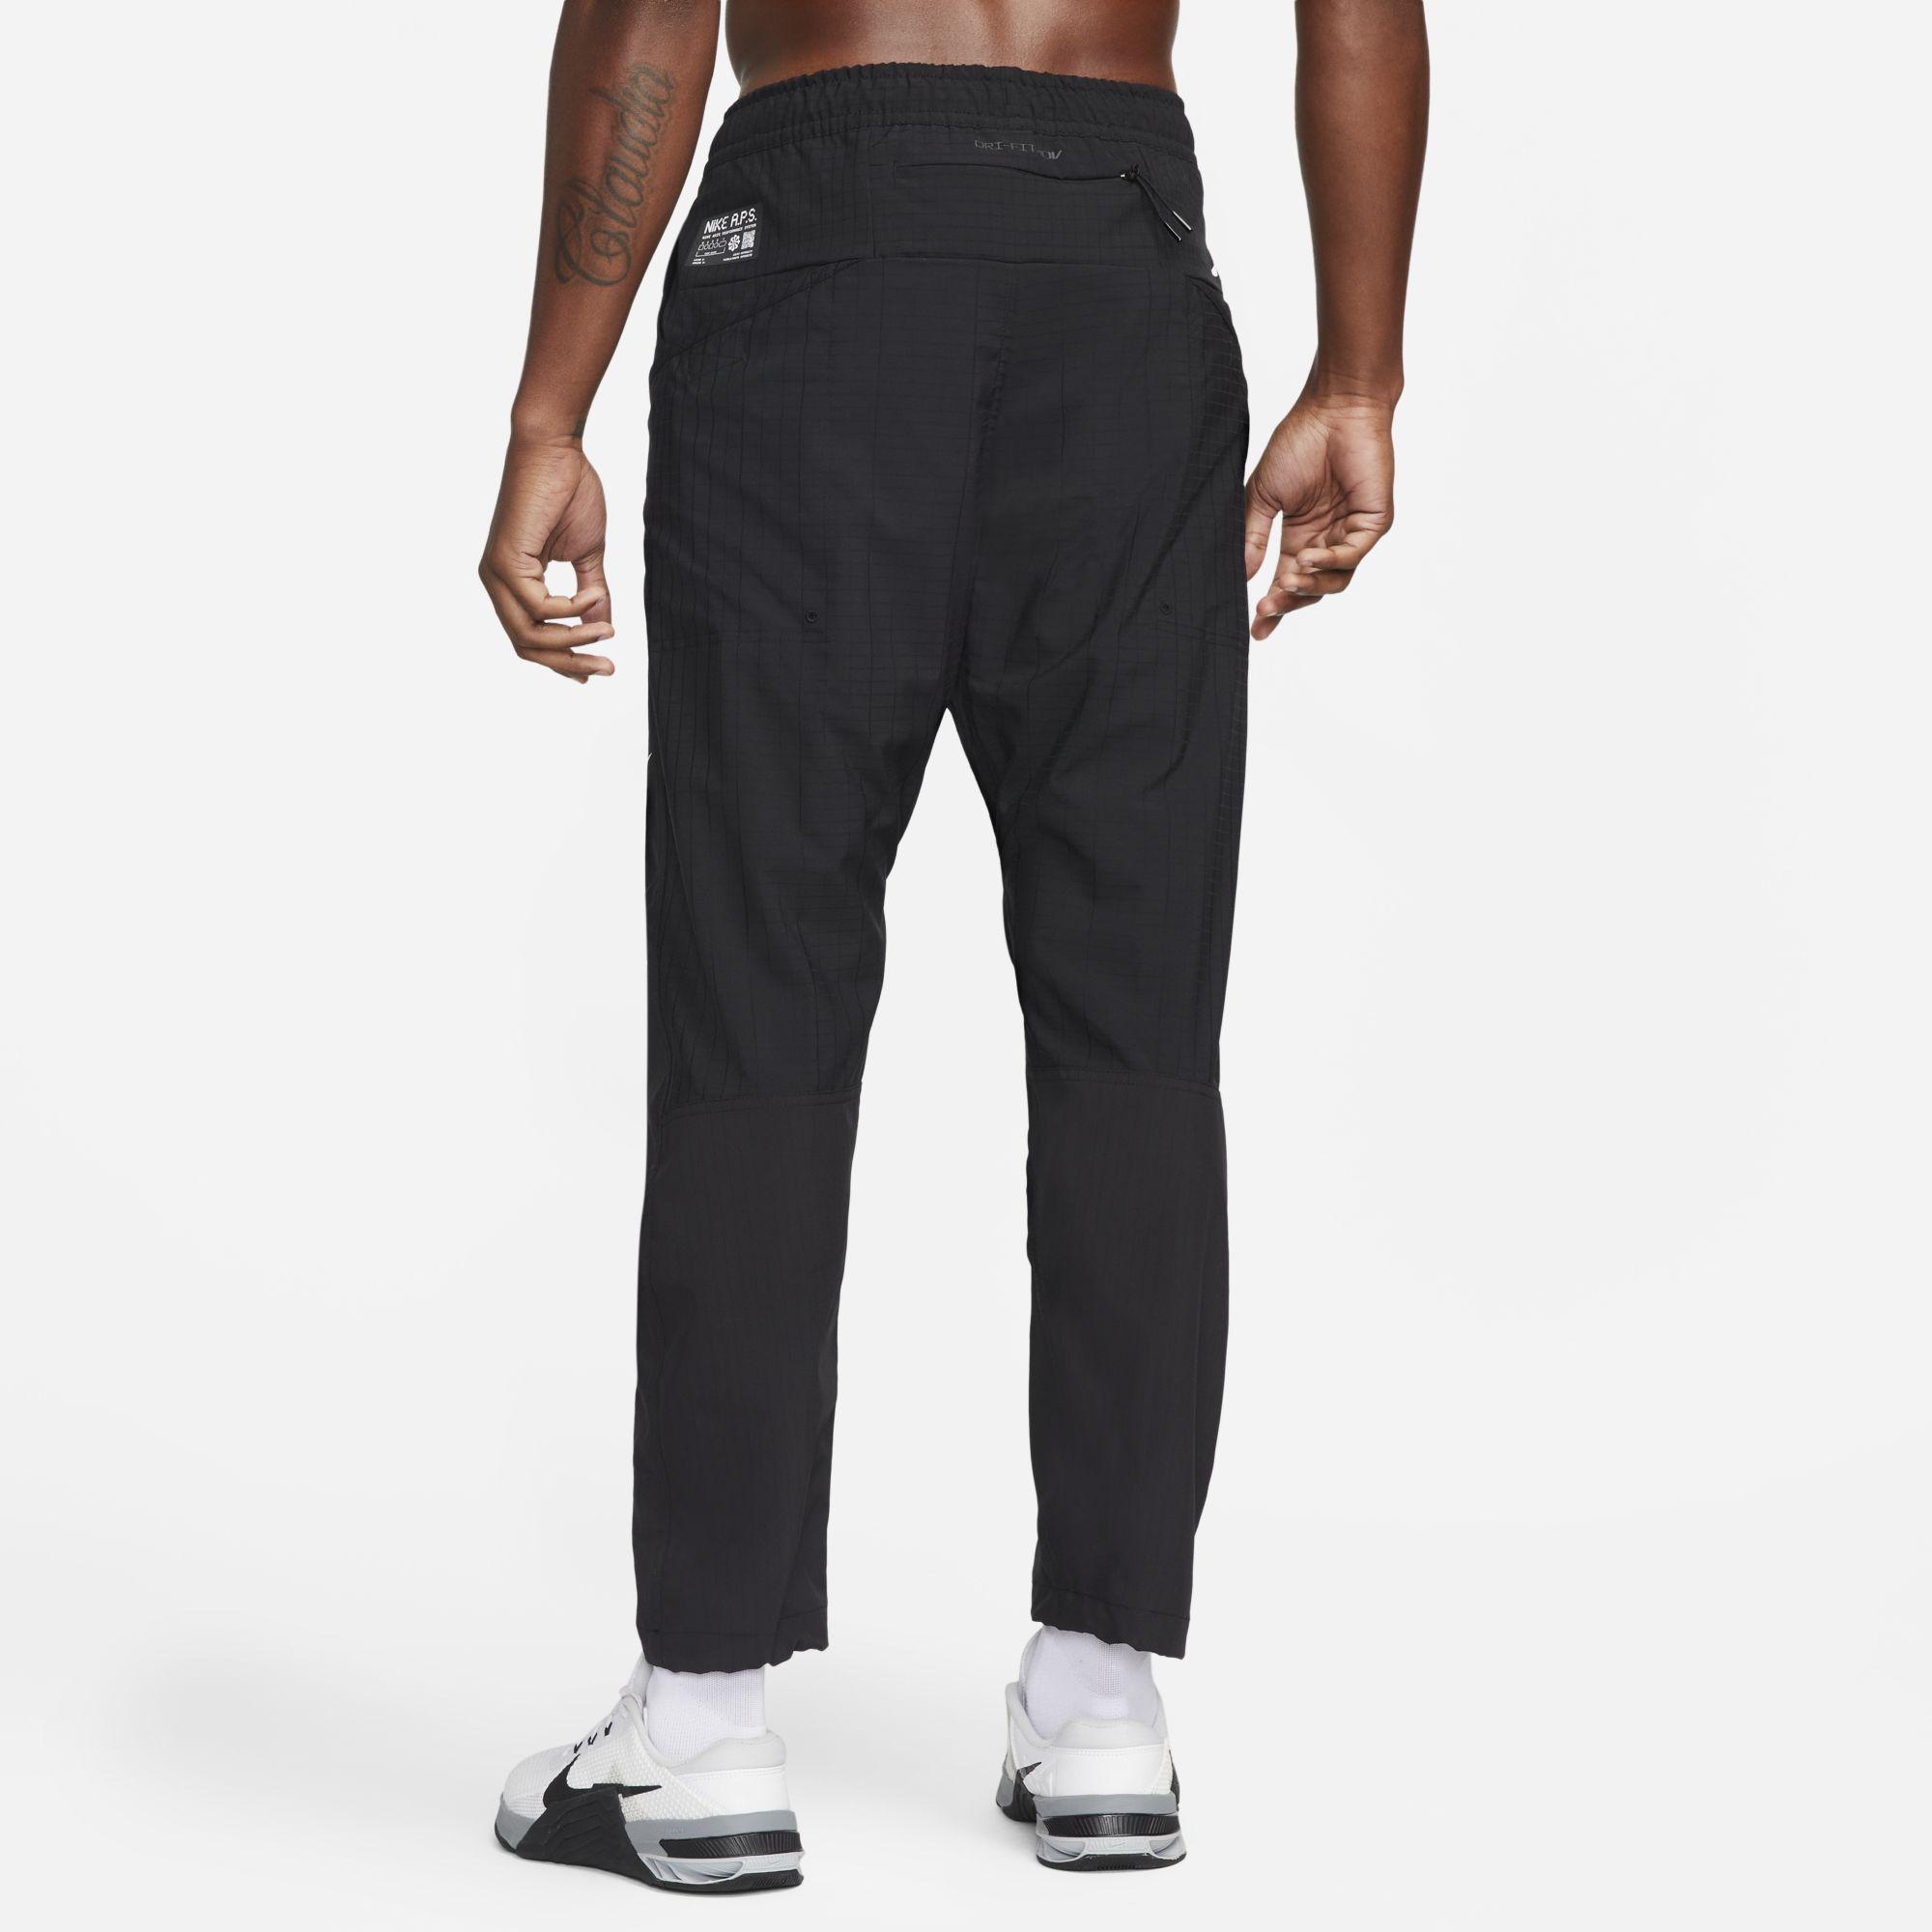 Nike Nike Pro Dri-fit Adv Recovery Black/black/iron Grey